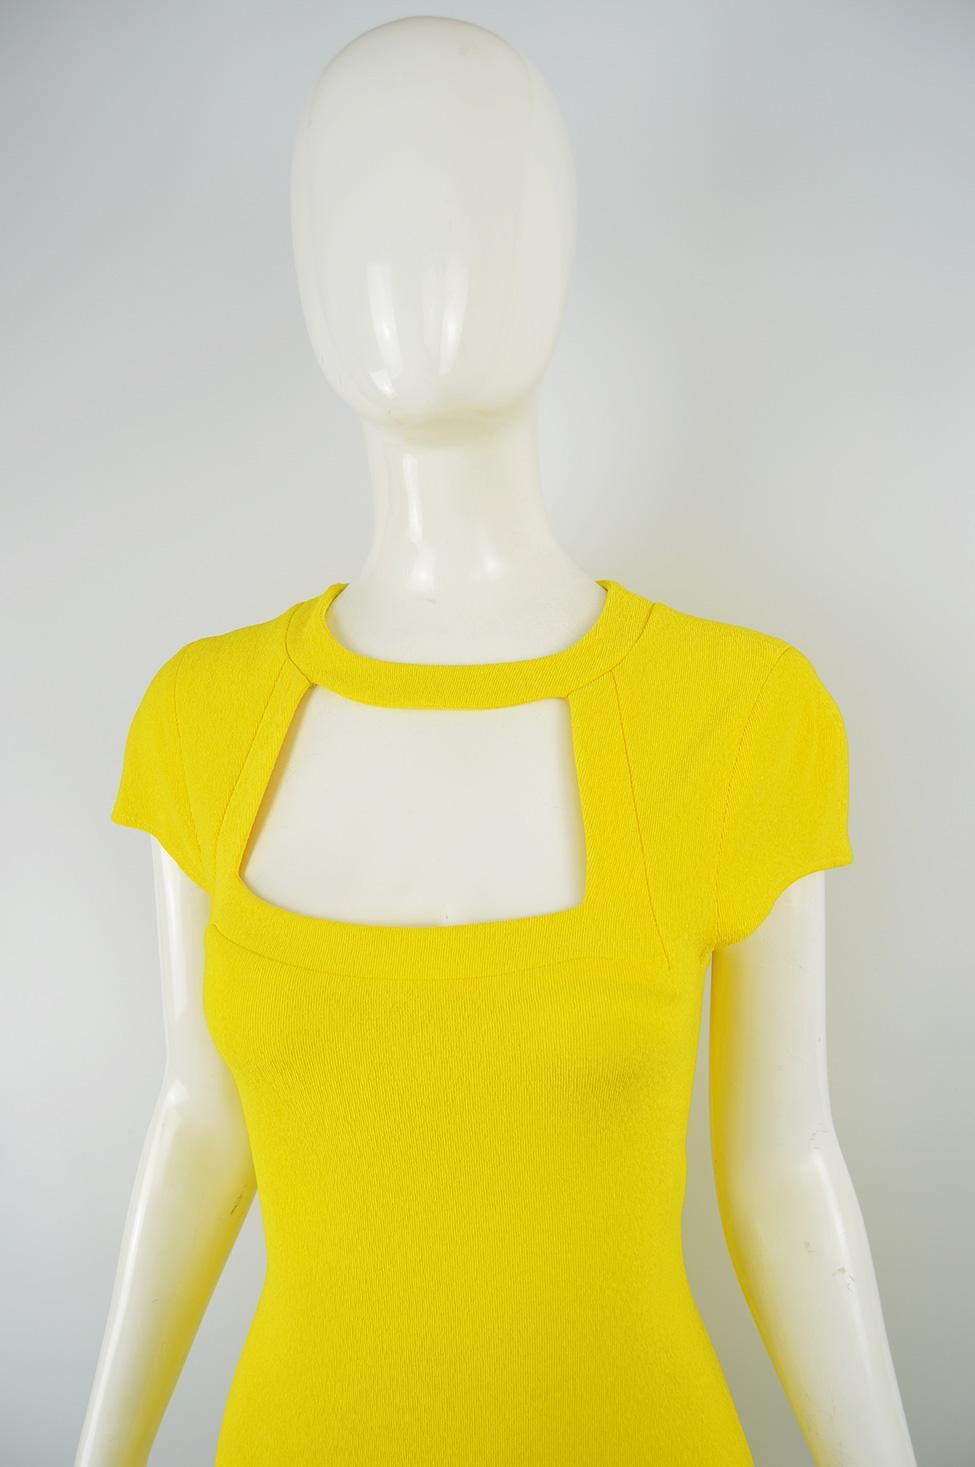 Women's Genevieve Tarka Paris 1980s Yellow Bodycon Knit Jersey Cut Out Party Dress